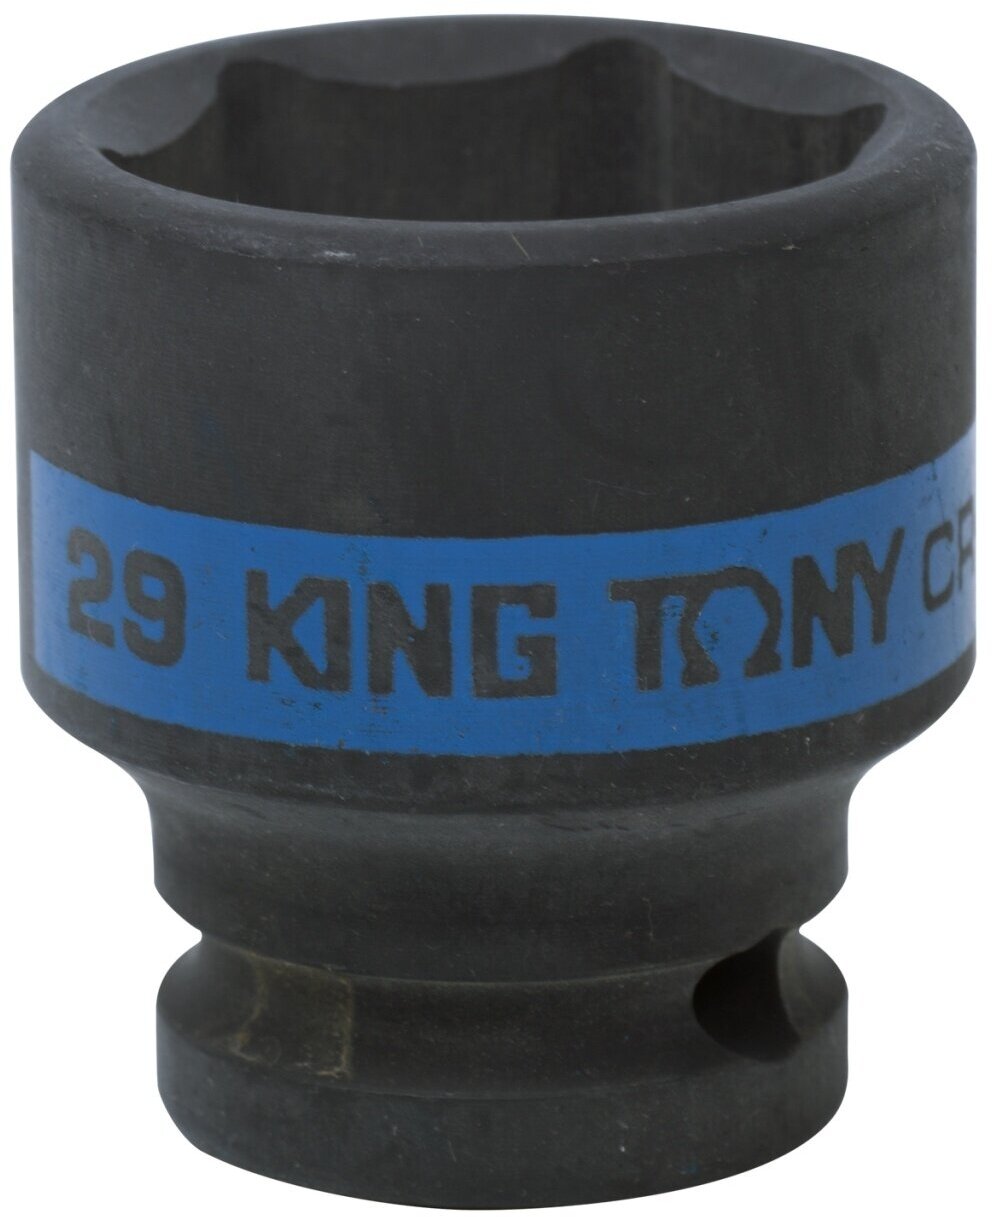 KING TONY Головка торцевая ударная шестигранная 1/2", 29 мм